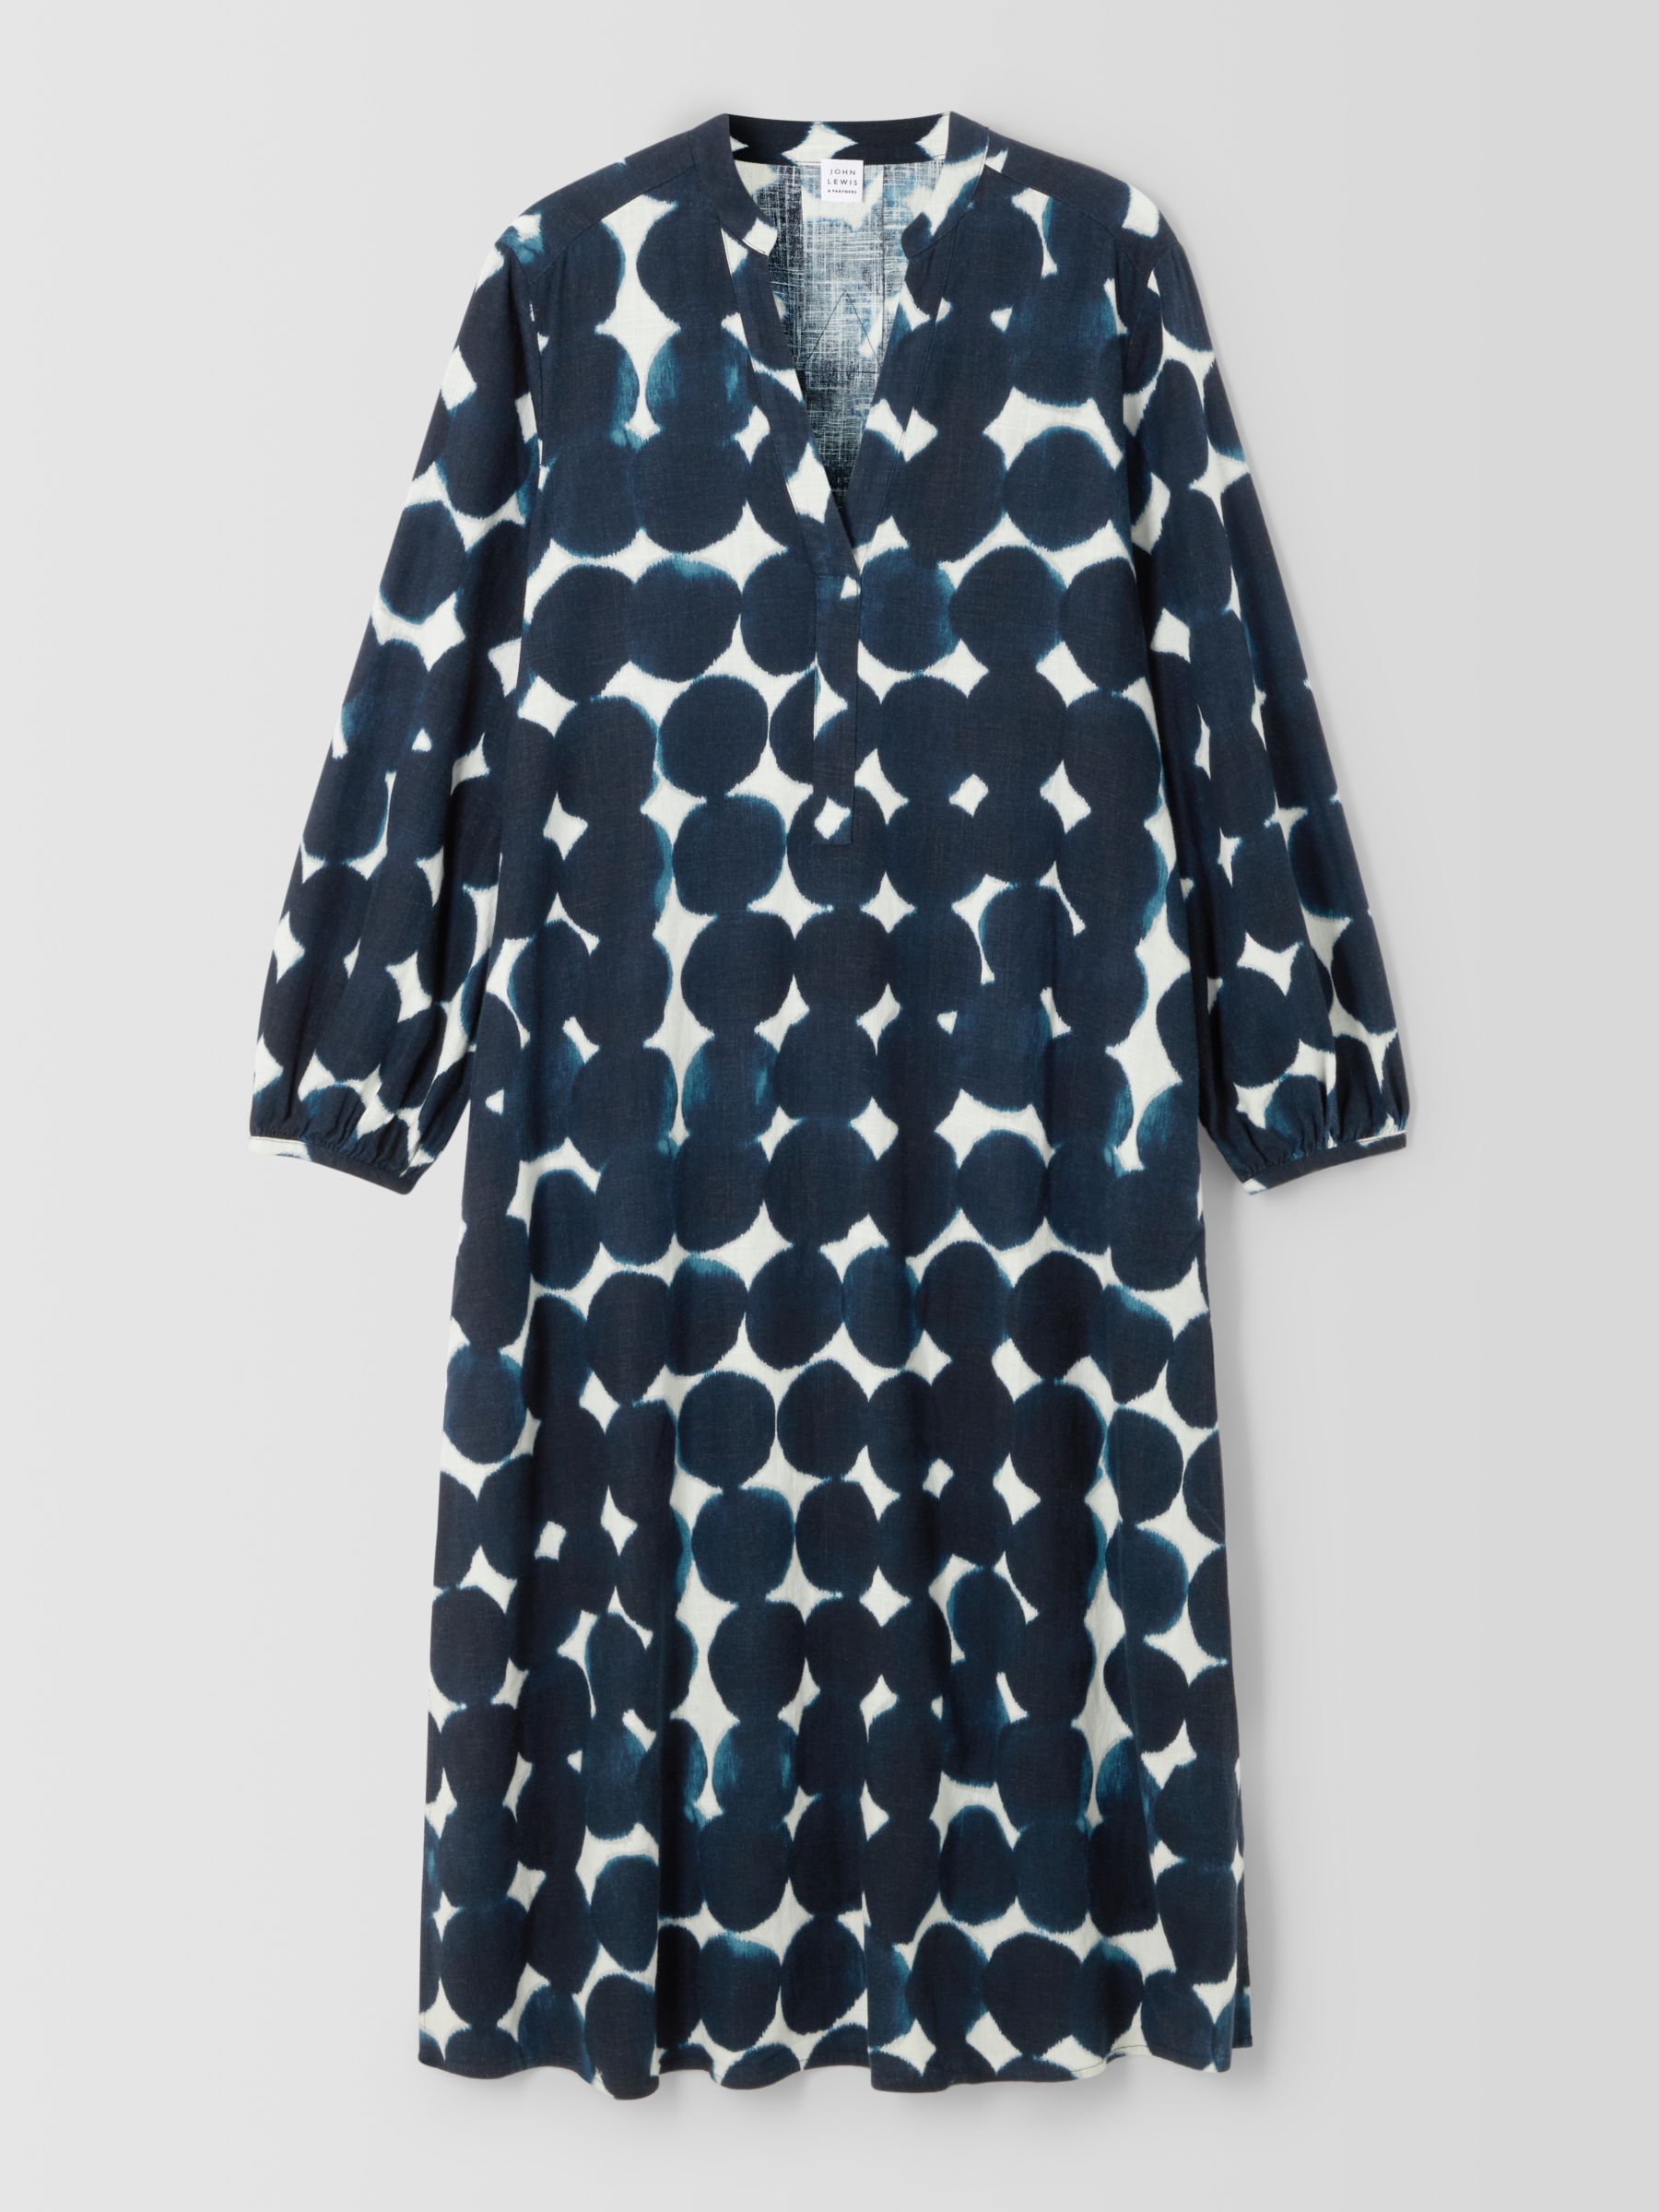 John Lewis Spot Print Linen Blend Dress, Blue/Multi, 12